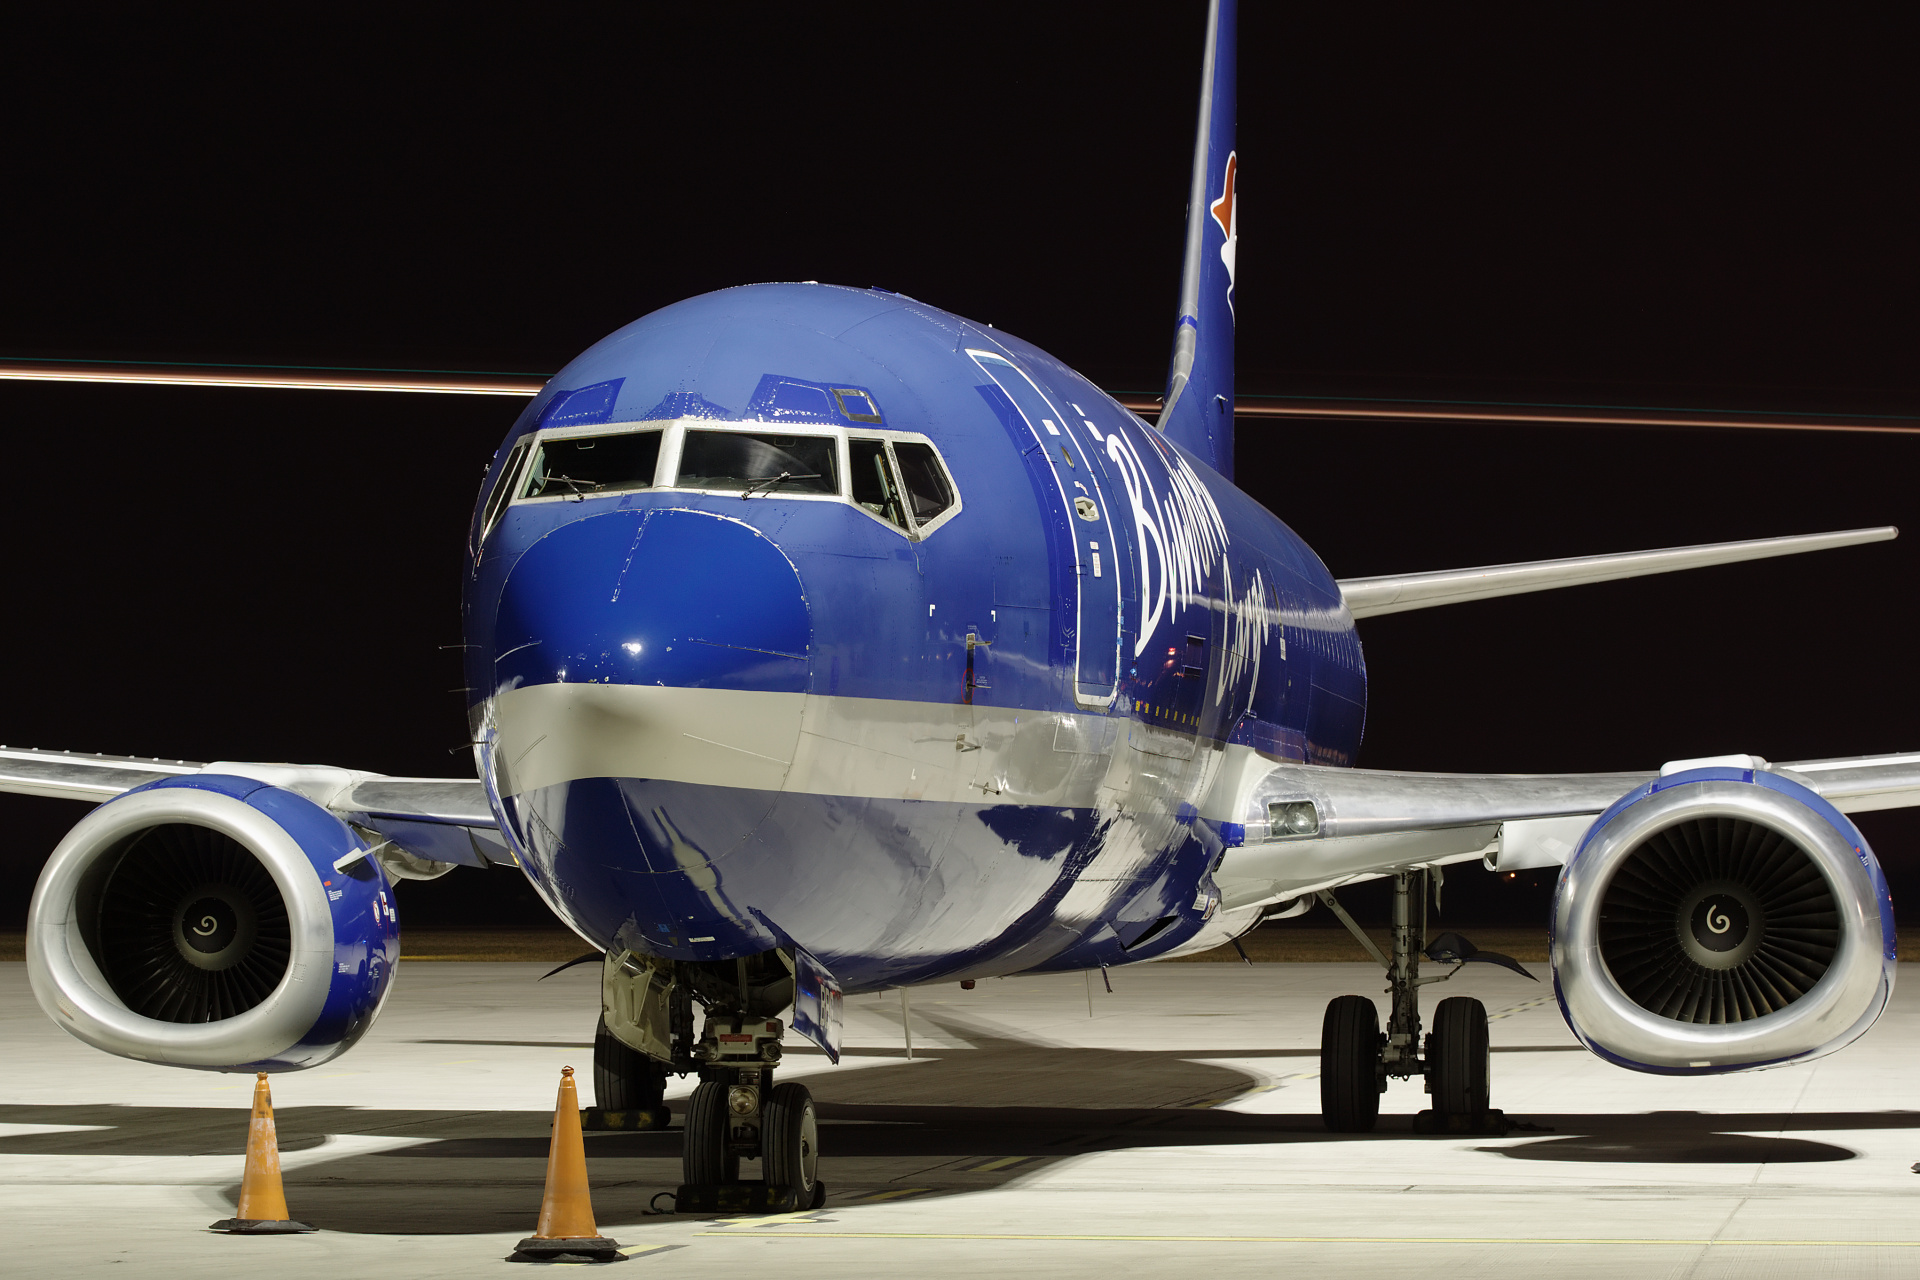 BDSF, TF-BBG (Aircraft » EPWA Spotting » Boeing 737-300F » Bluebird Nordic (Bluebird Cargo))